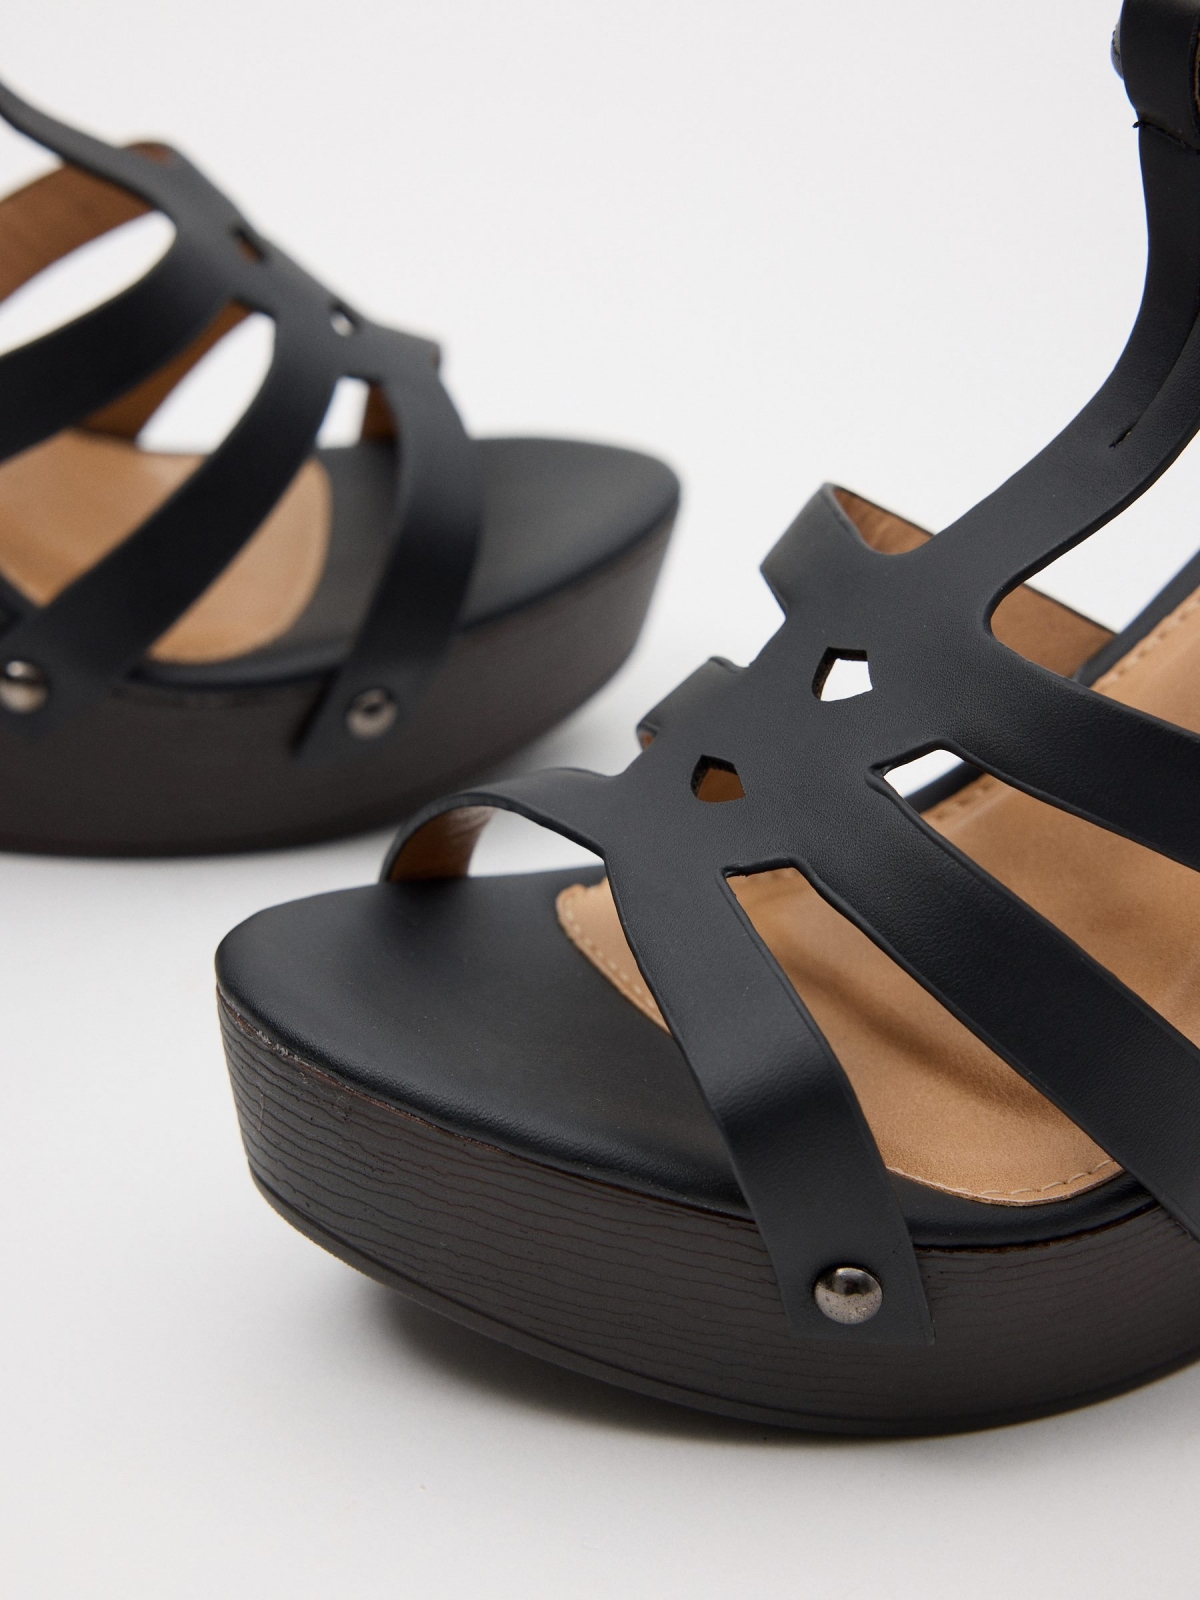 High heel platform sandal black/beige detail view